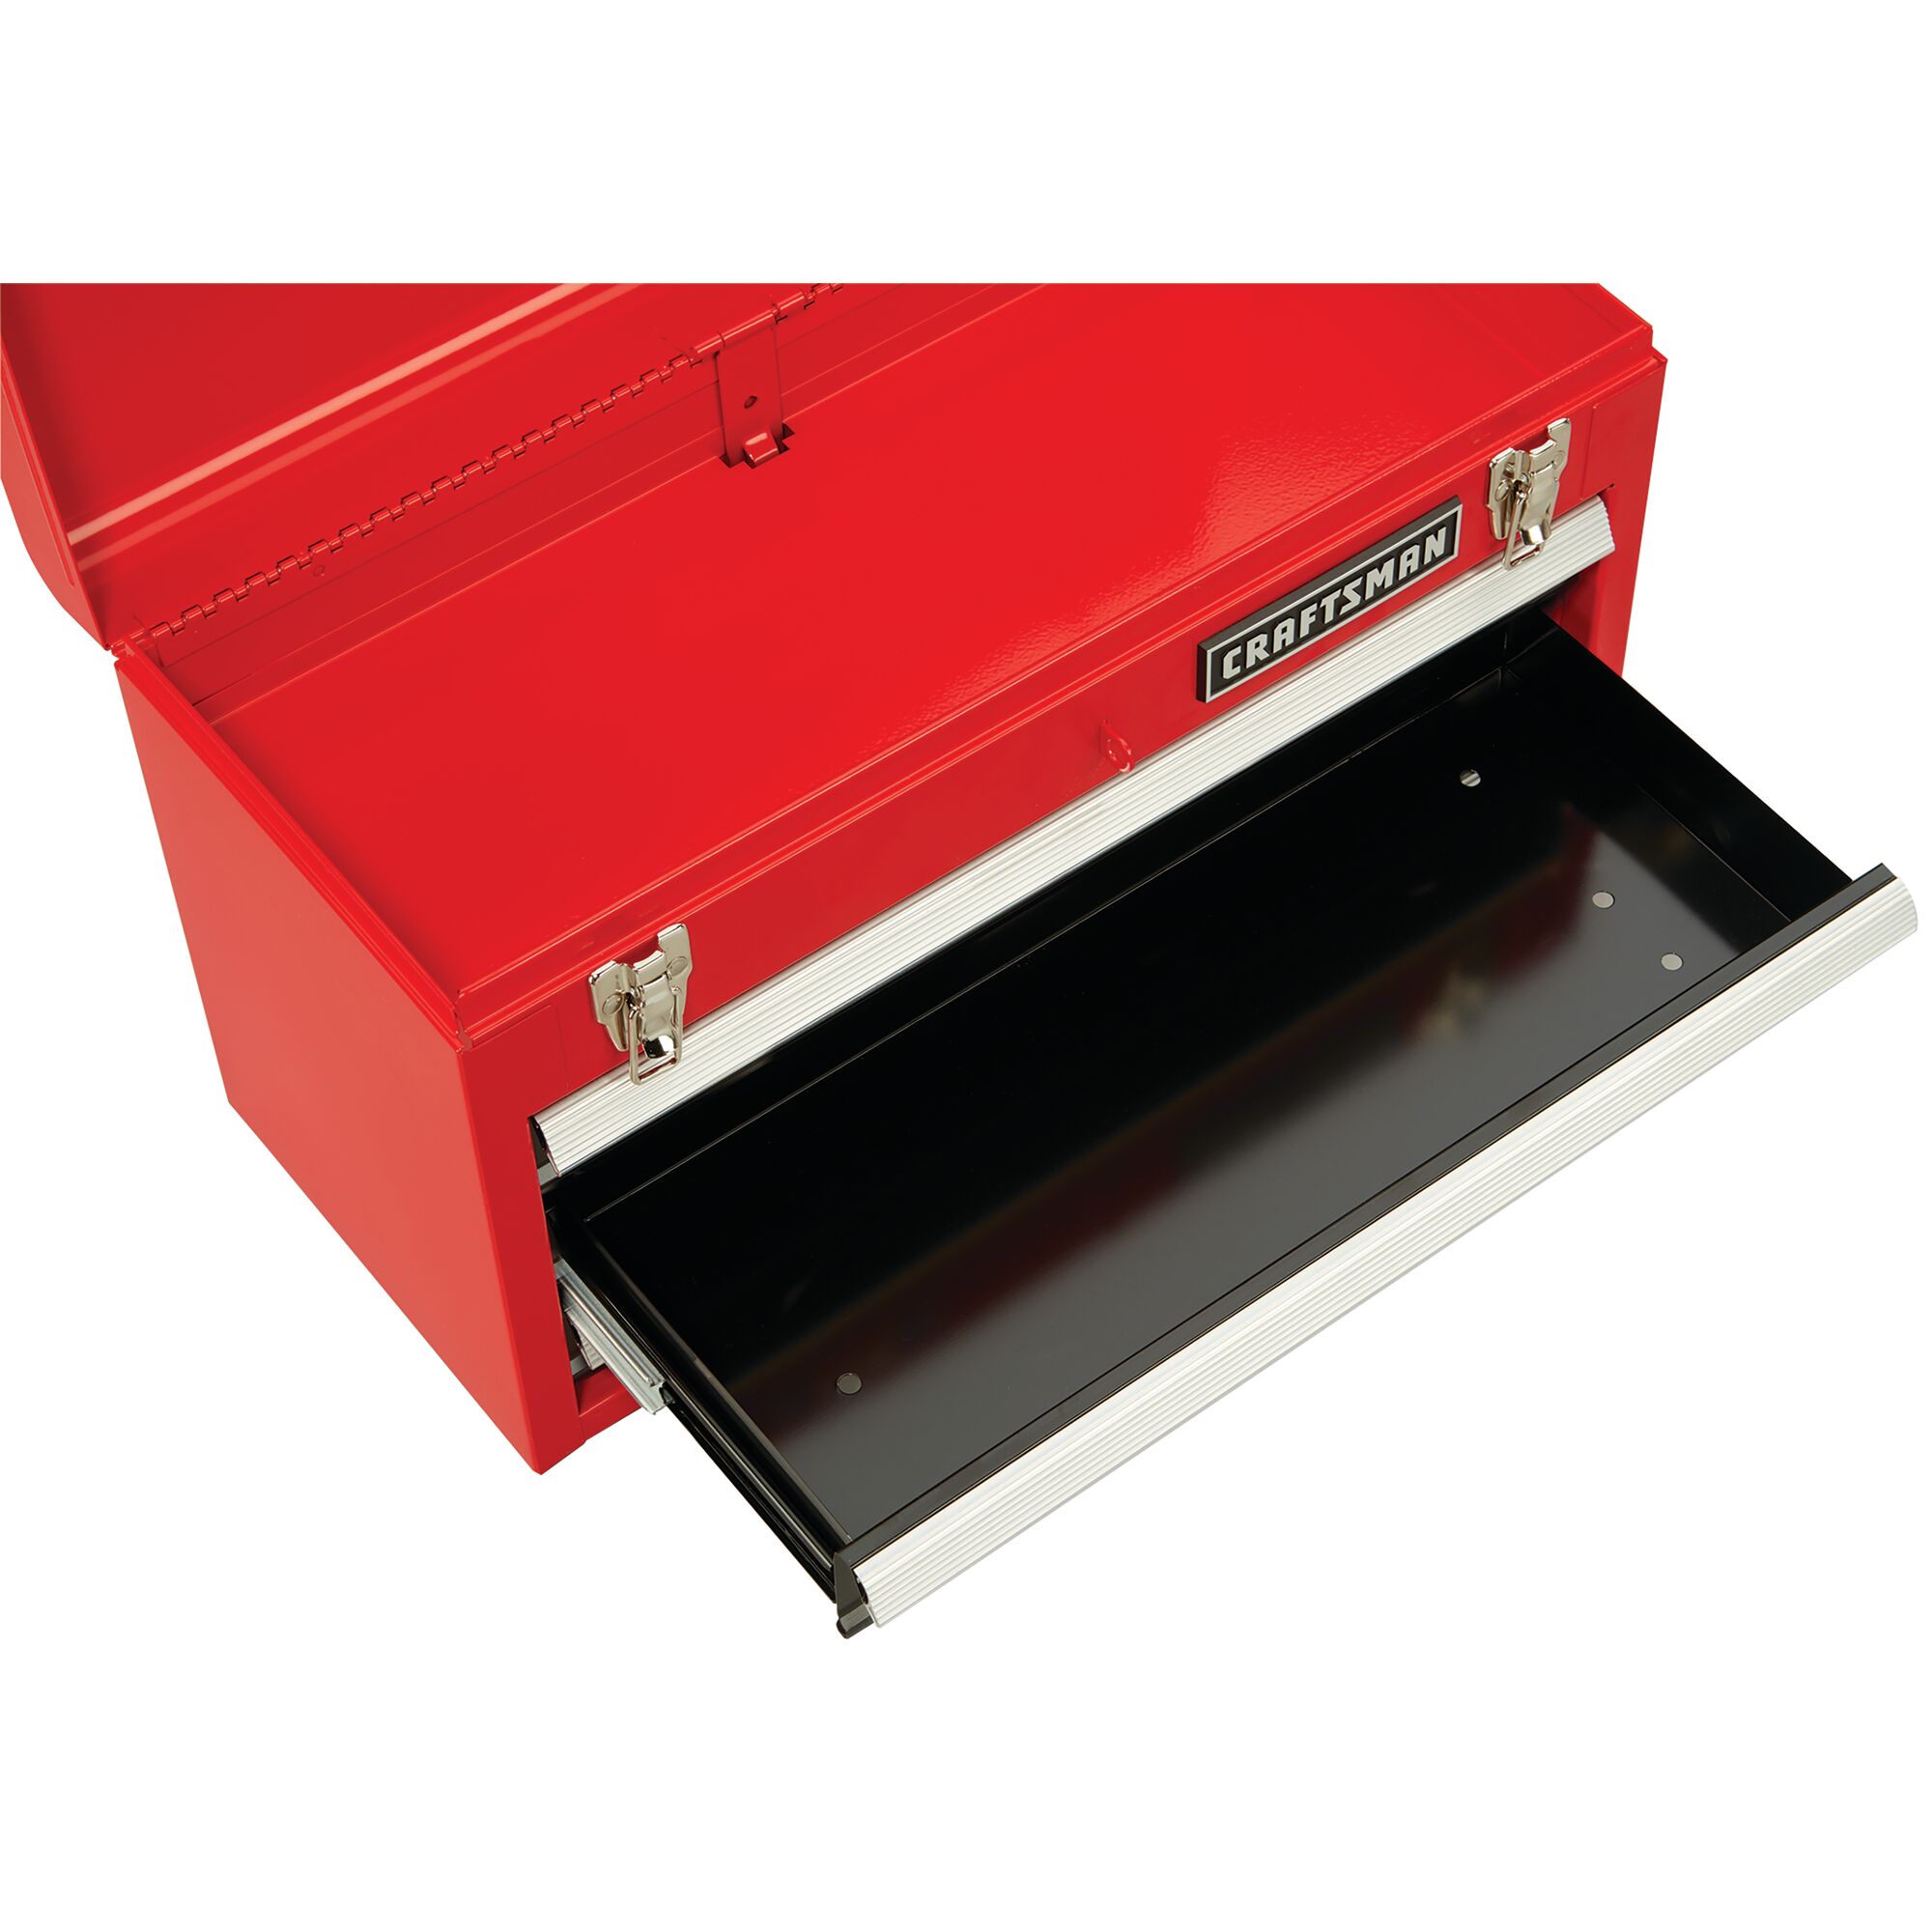 Ball bearing drawer slides operate smoothly feature of portable 20.5 Inch ball bearing 3 drawer steel lockable tool box.